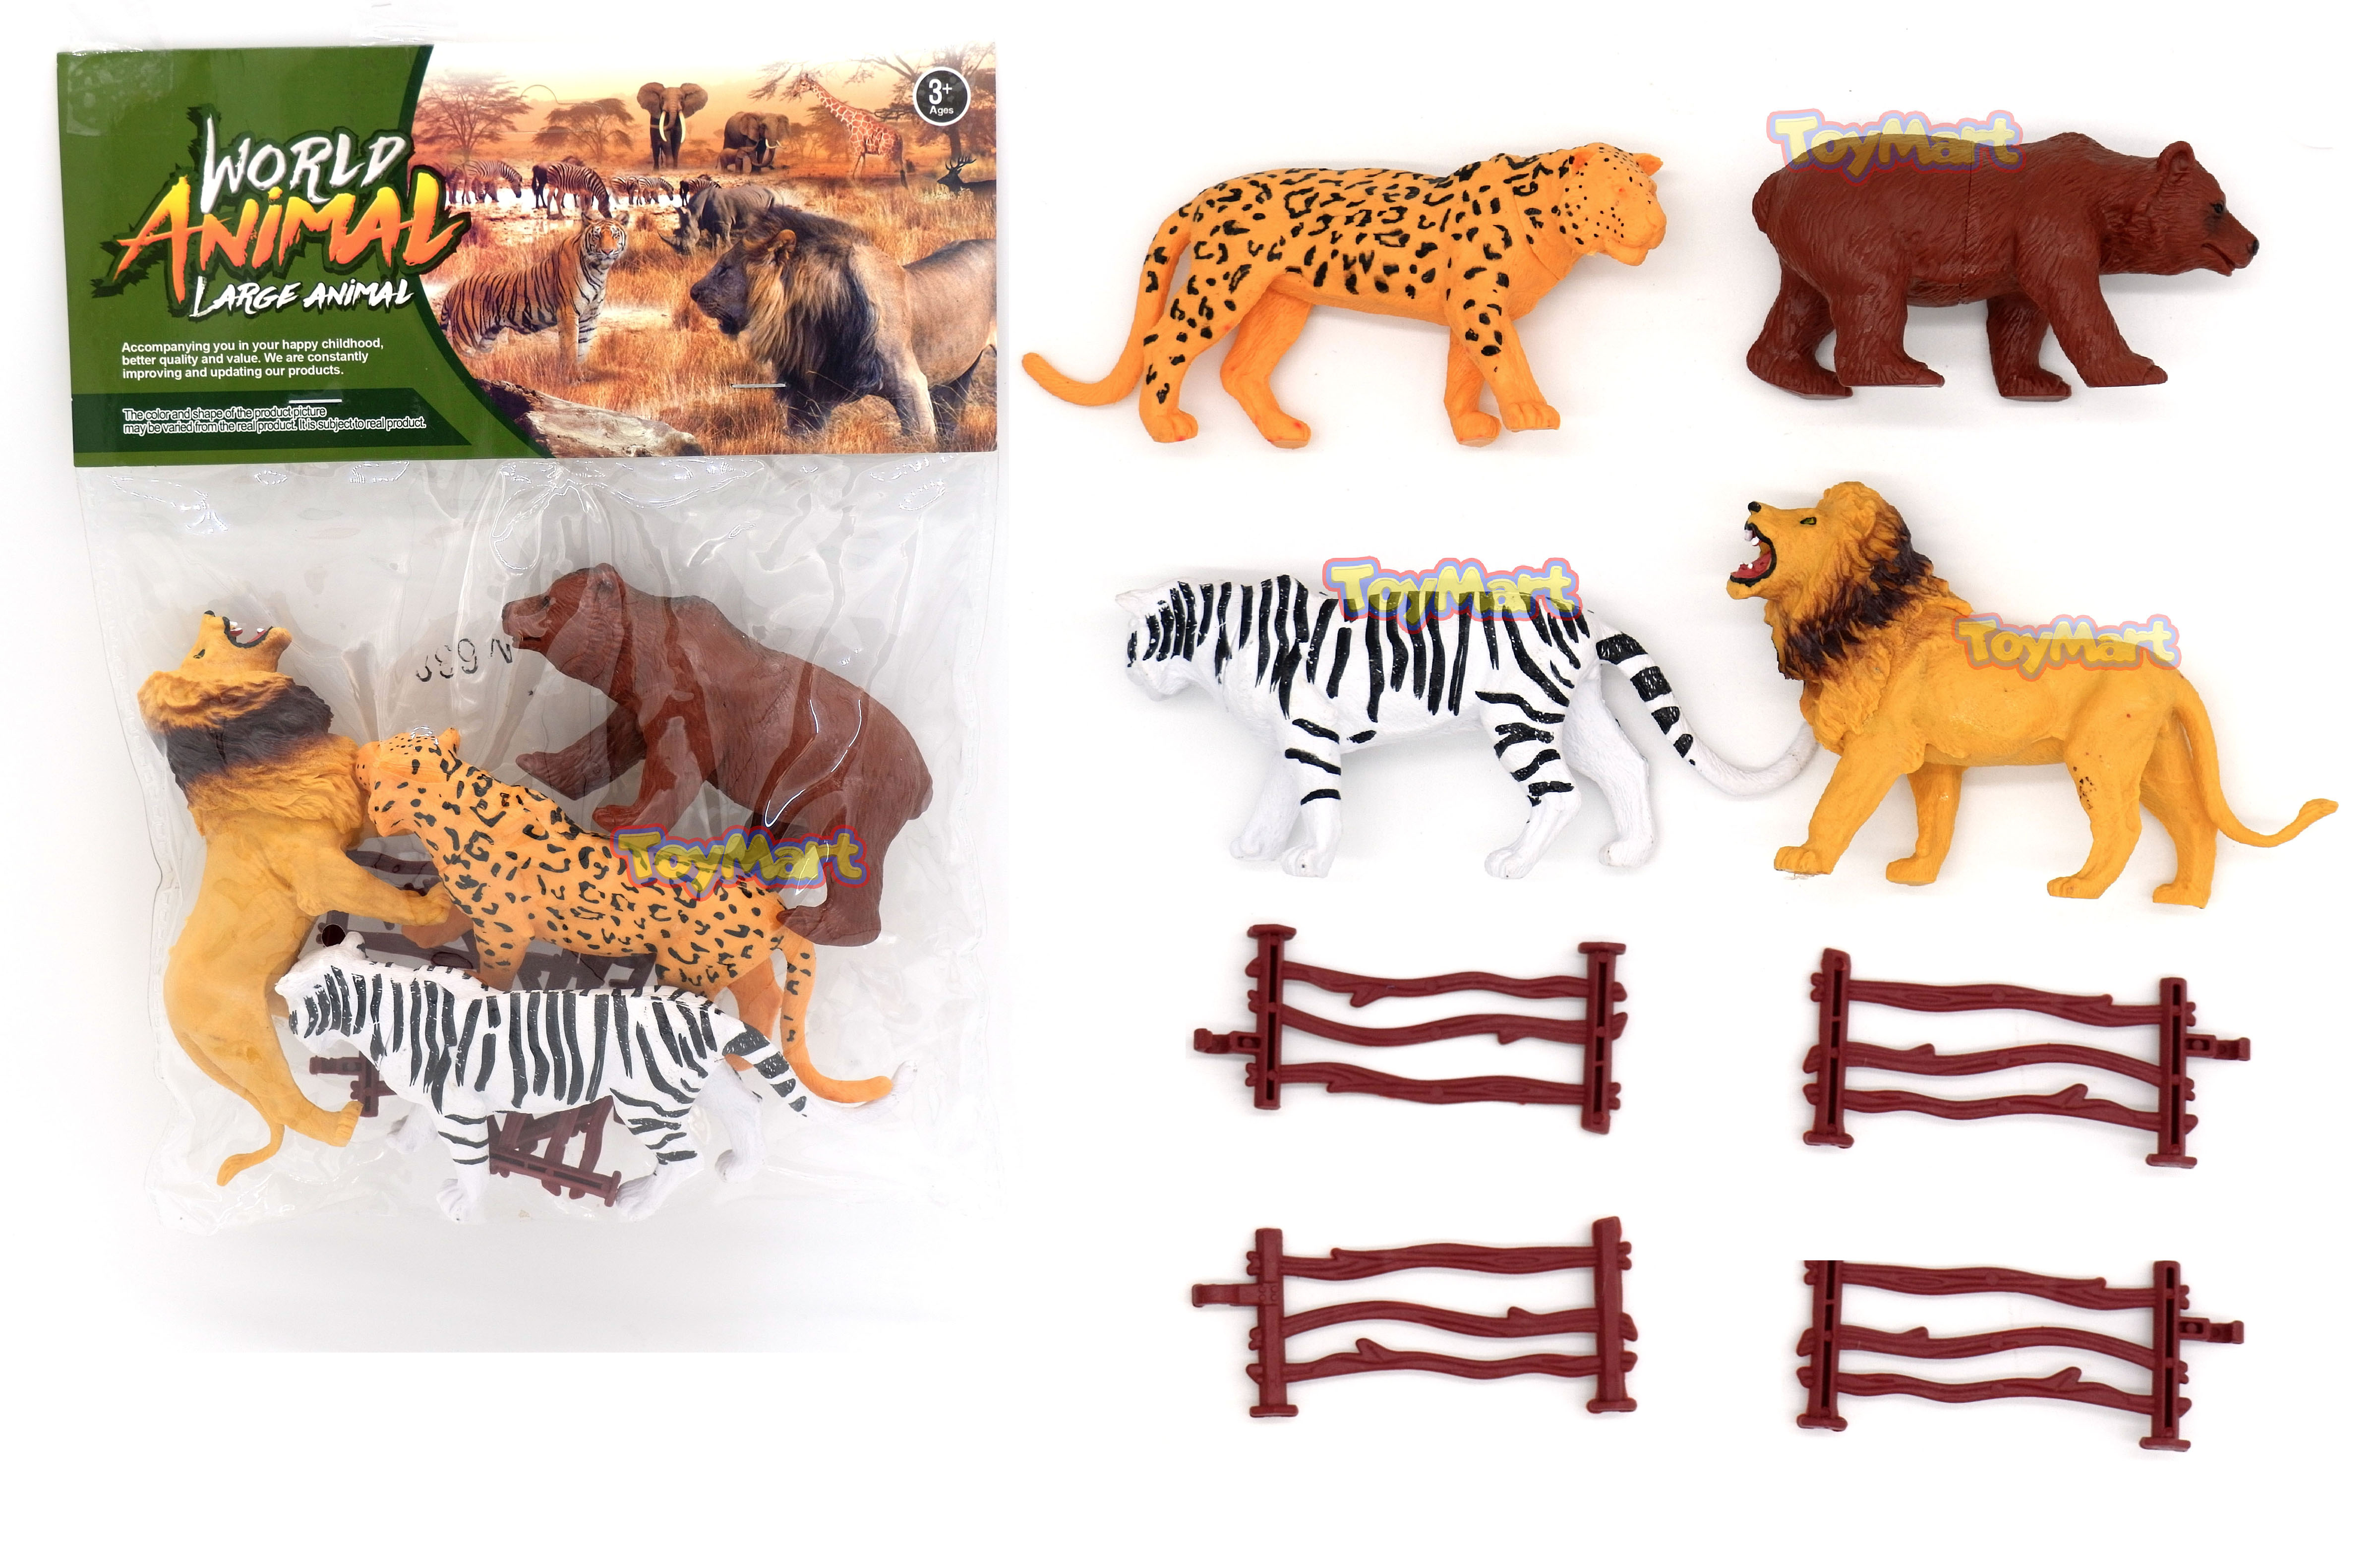 4 in 1 Simulation Safari Wild Animal World Rubberized Large Animals Figure  Play Set Caketopper Decoration Imported Quality Children Kids Toy Gift  ToyMart Toys Play Set Simulation Toy | Lazada PH